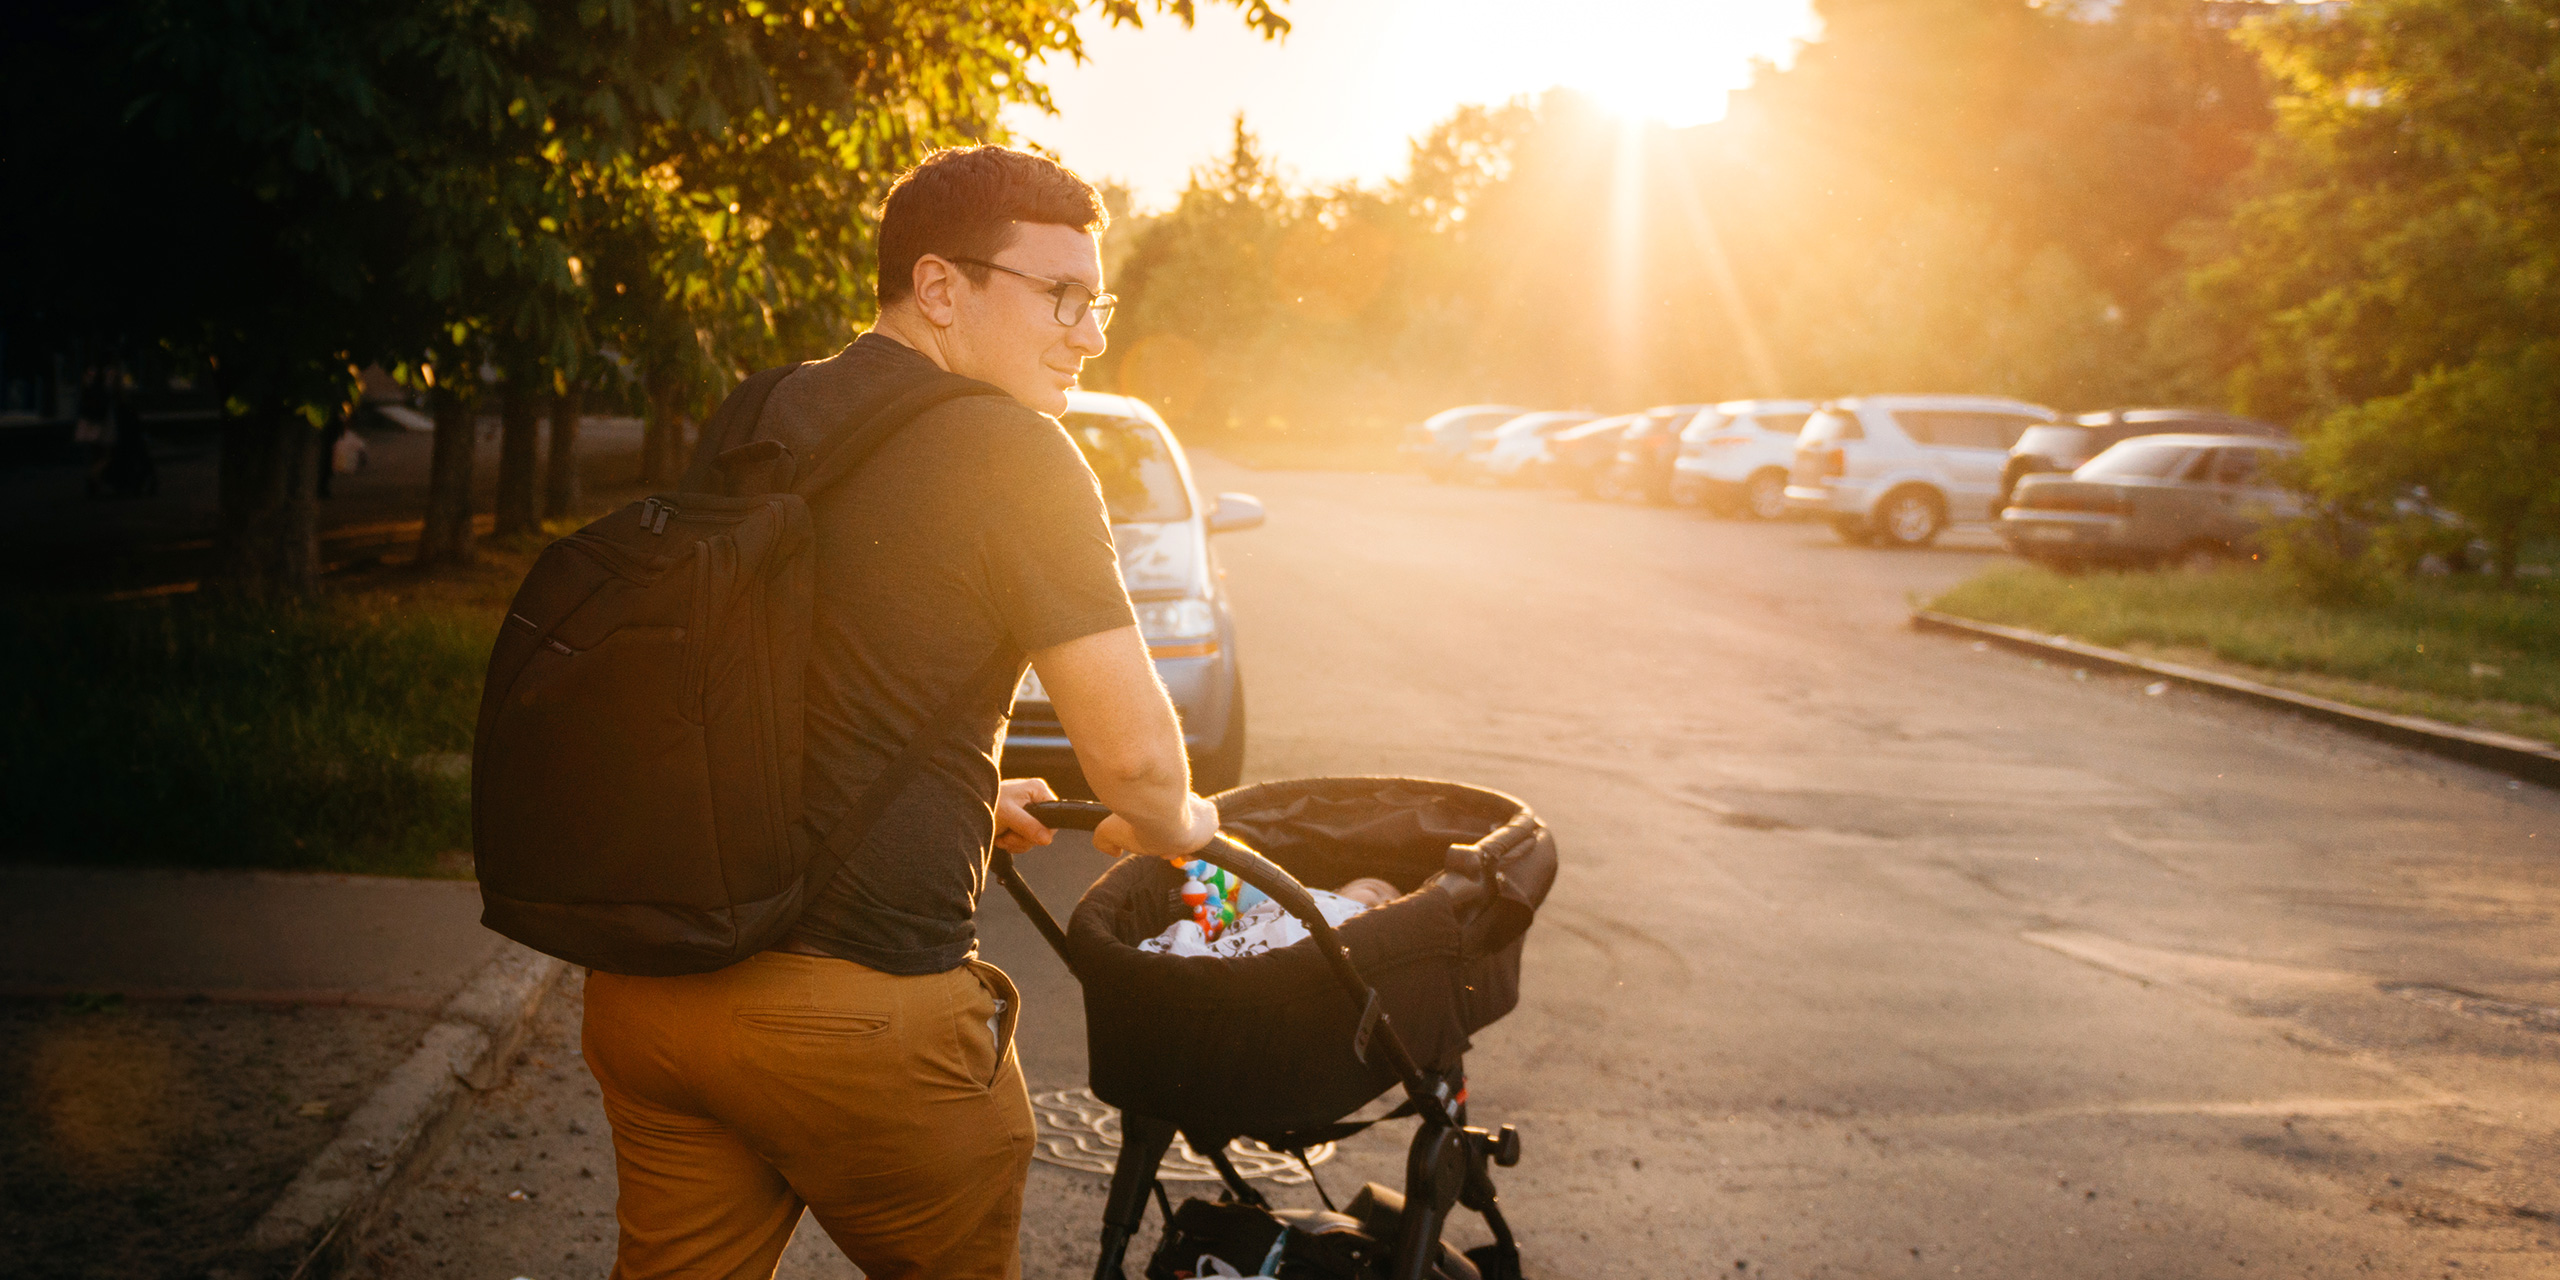 dad baby bassinet stroller backpack ; Courtesy of Troyan/Shutterstock